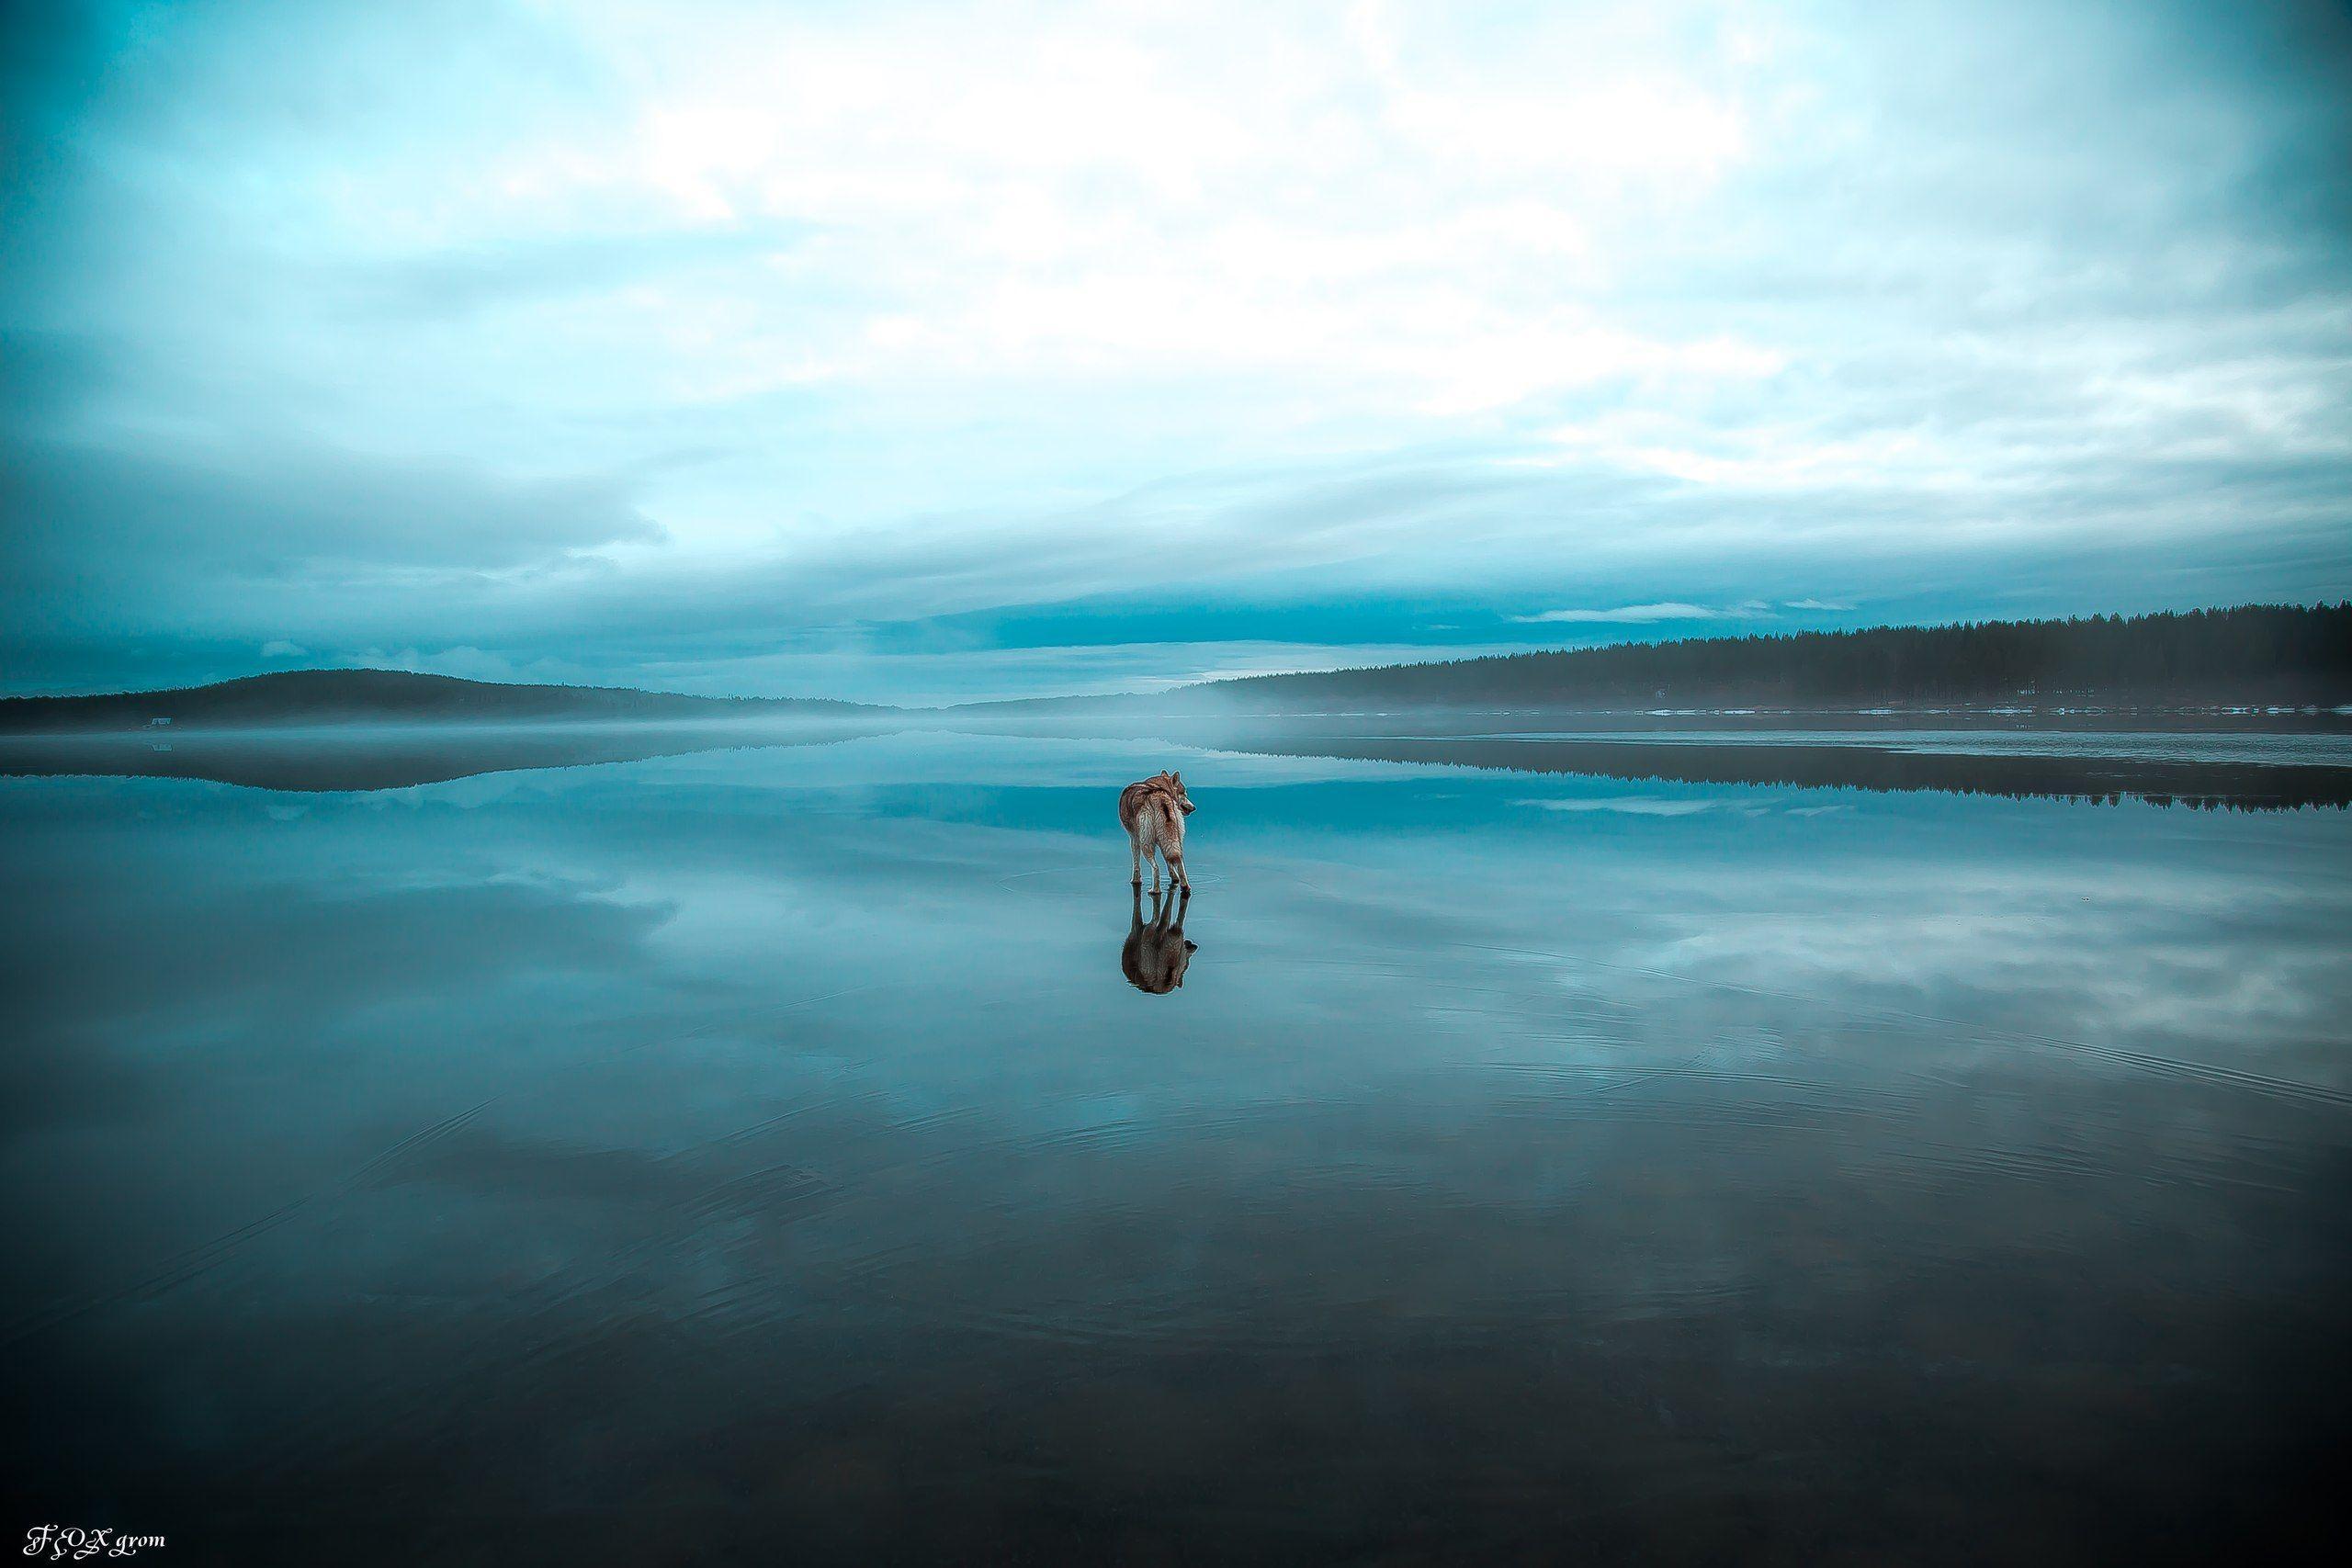 A husky walks on water in Alaska. The image was taken after heavy